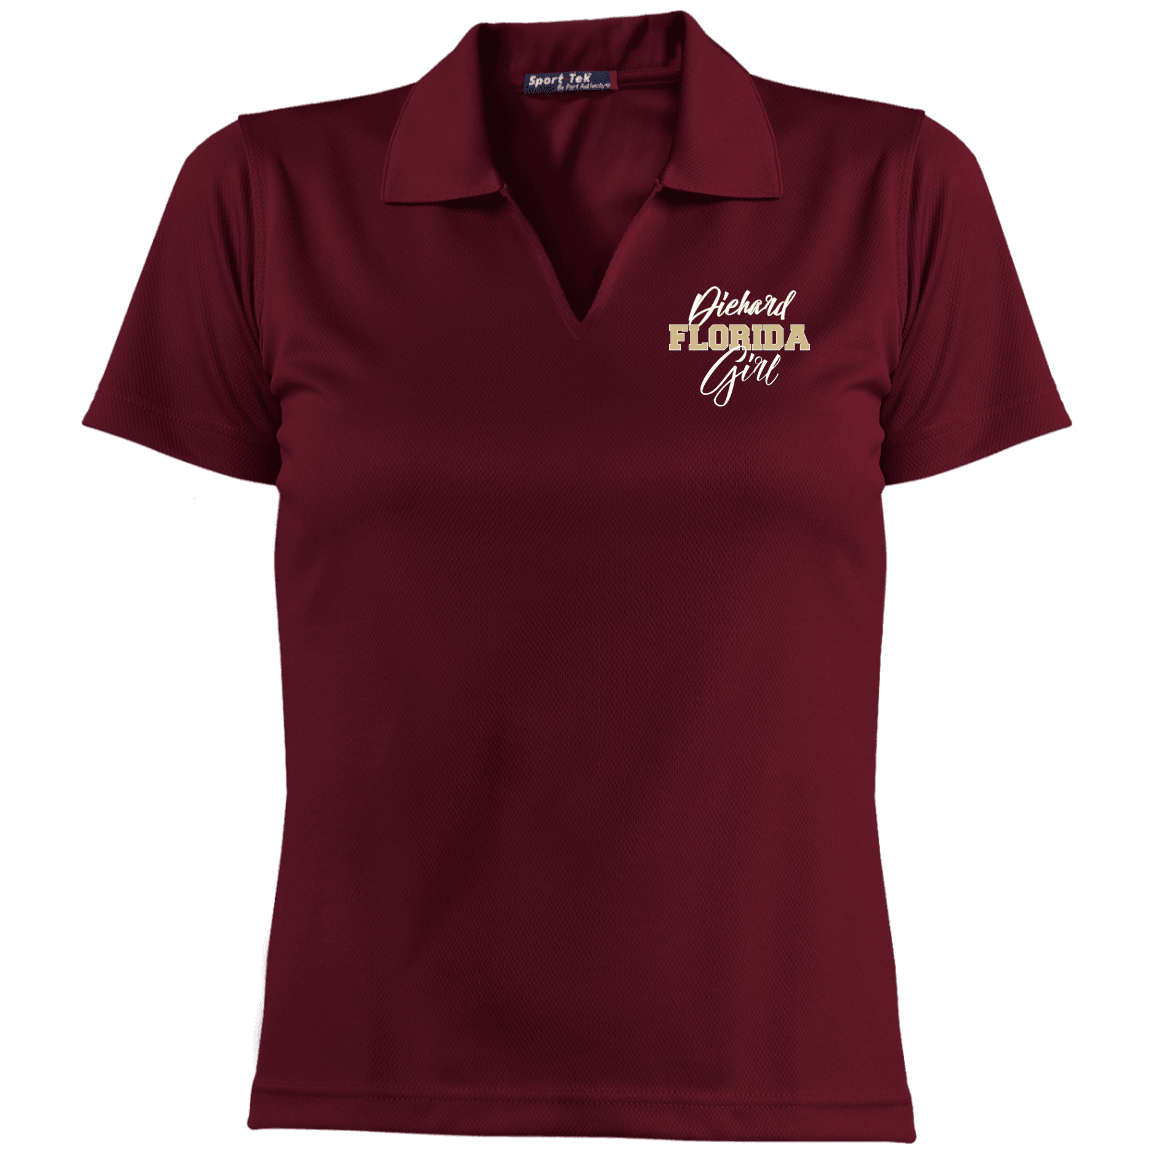 Designs by MyUtopia Shout Out:Diehard Florida Girl Embroidered Dri-Mesh Short Sleeve Ladies' Polo Garnet,Maroon / X-Small,Polo Shirts